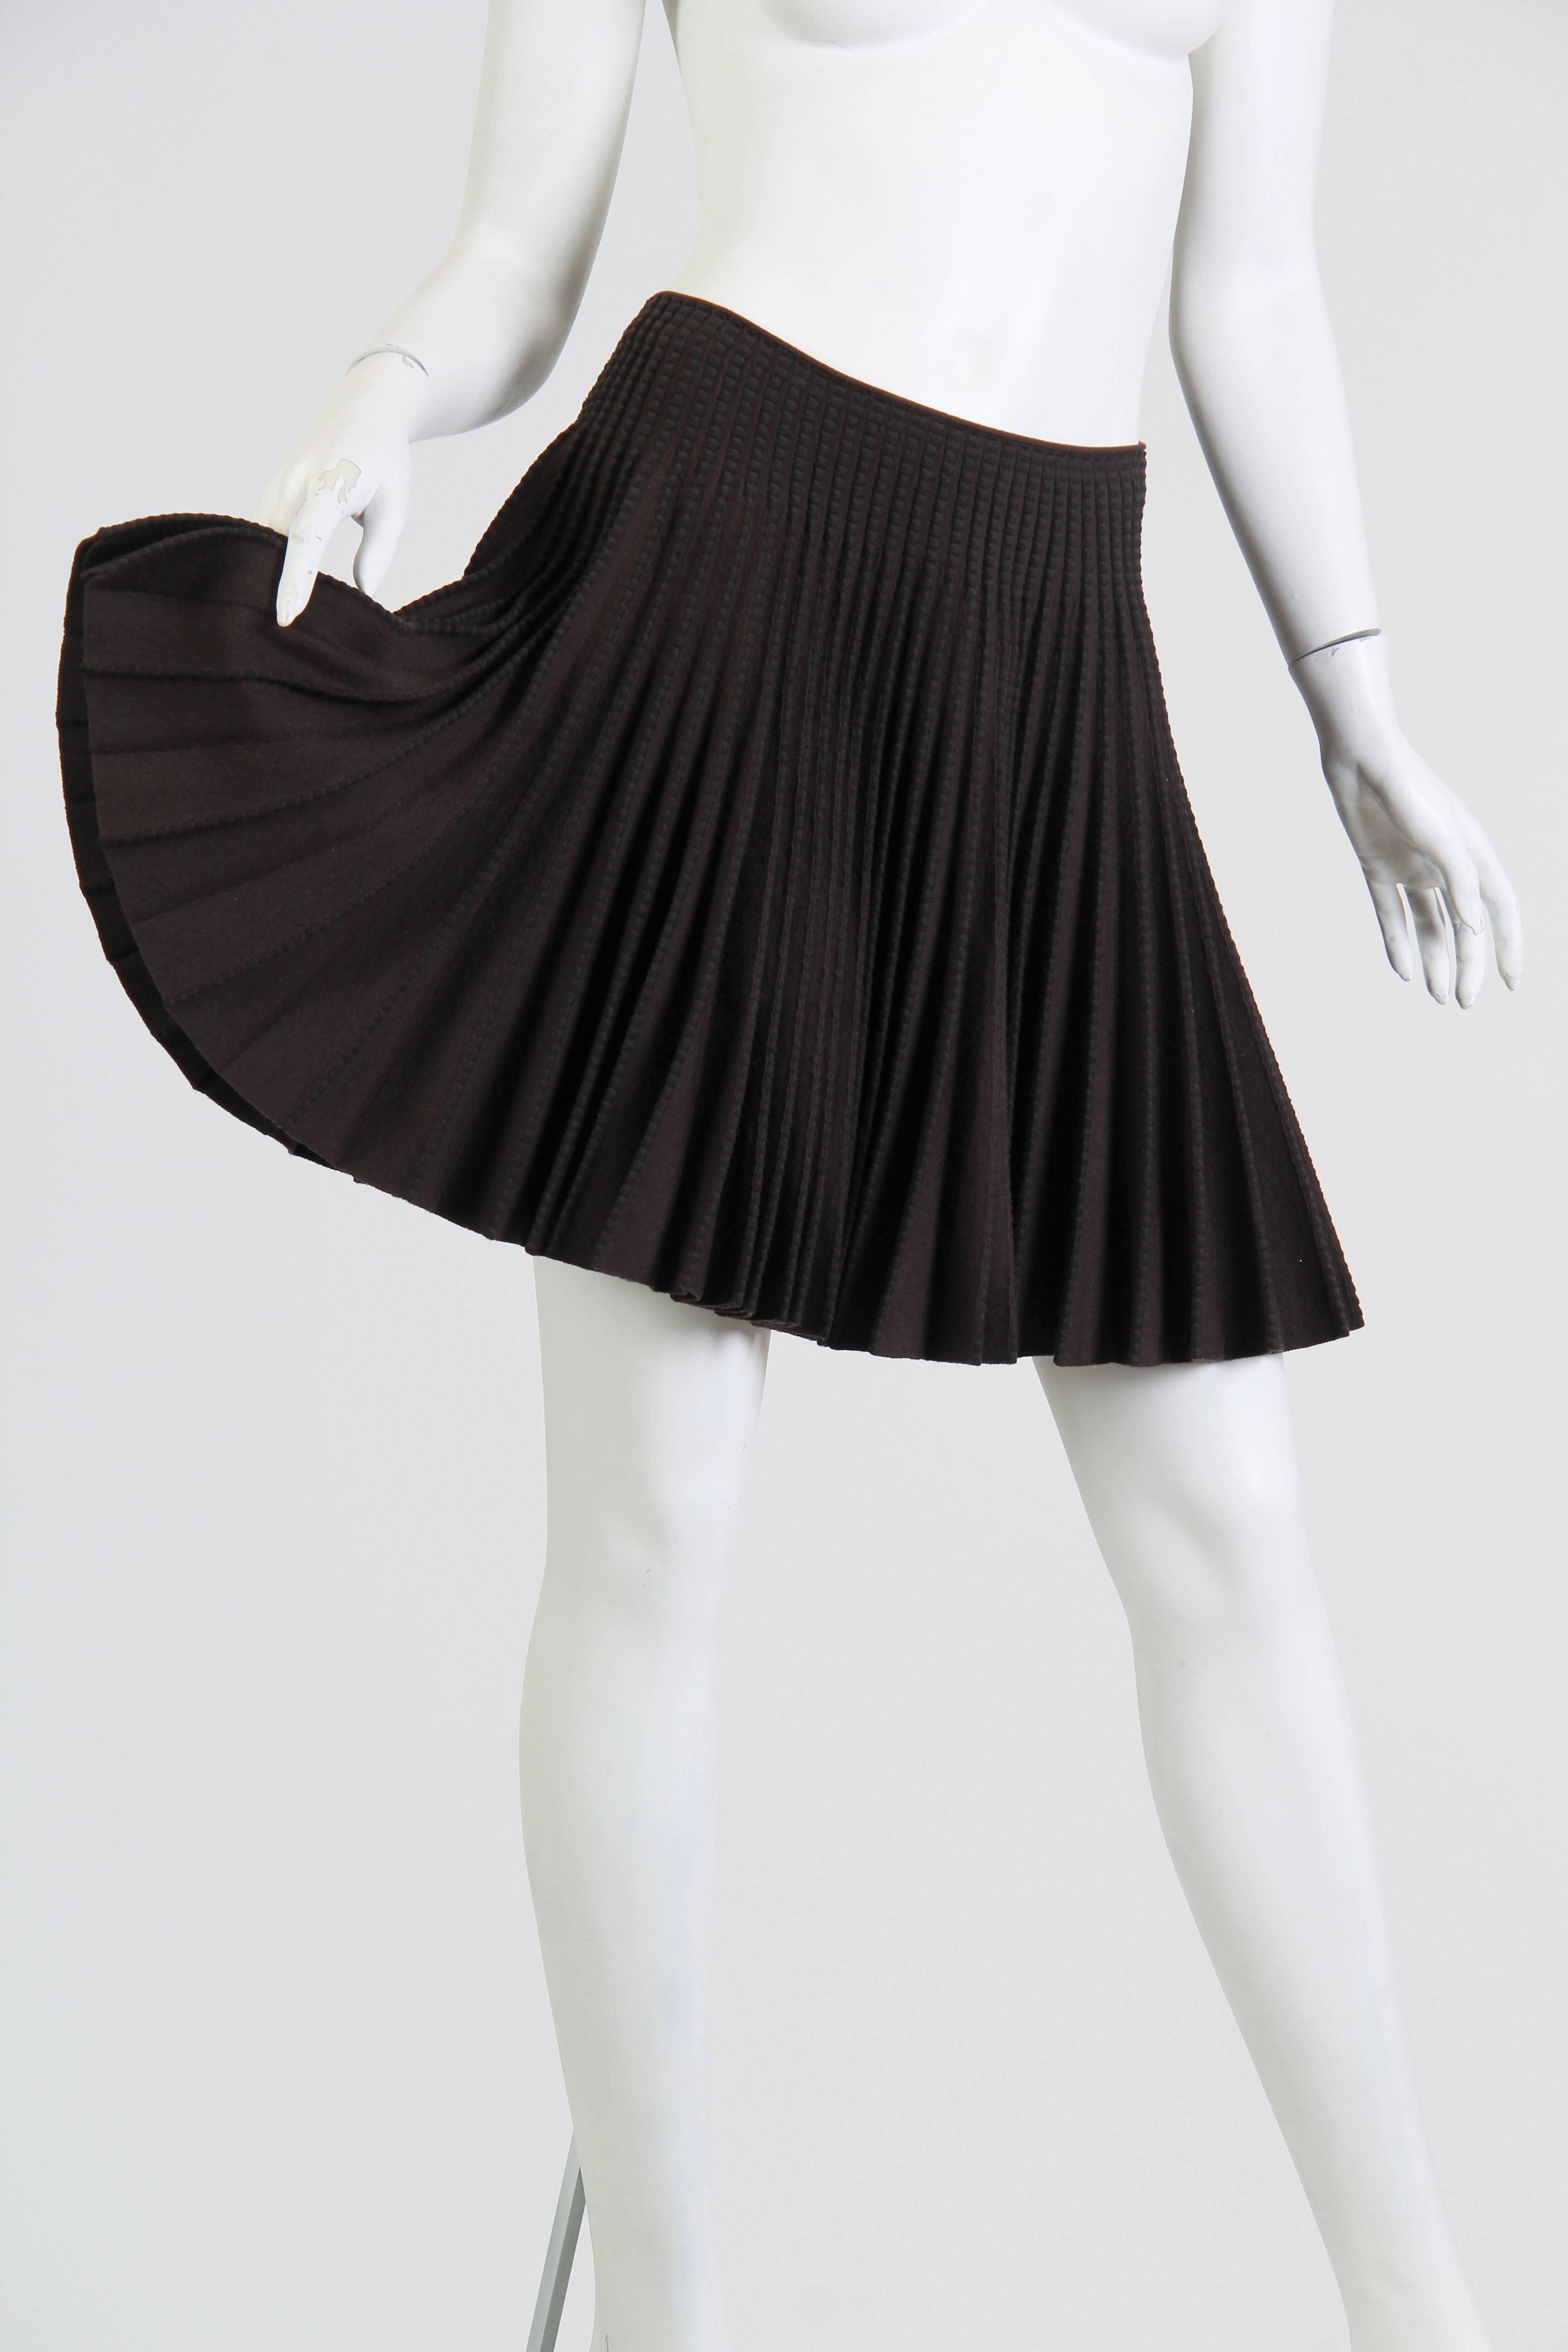 1990S AZZEDINE ALAIA Chocolate Brown & Black Rayon Blend Knit Ra-Ra Skirt 1